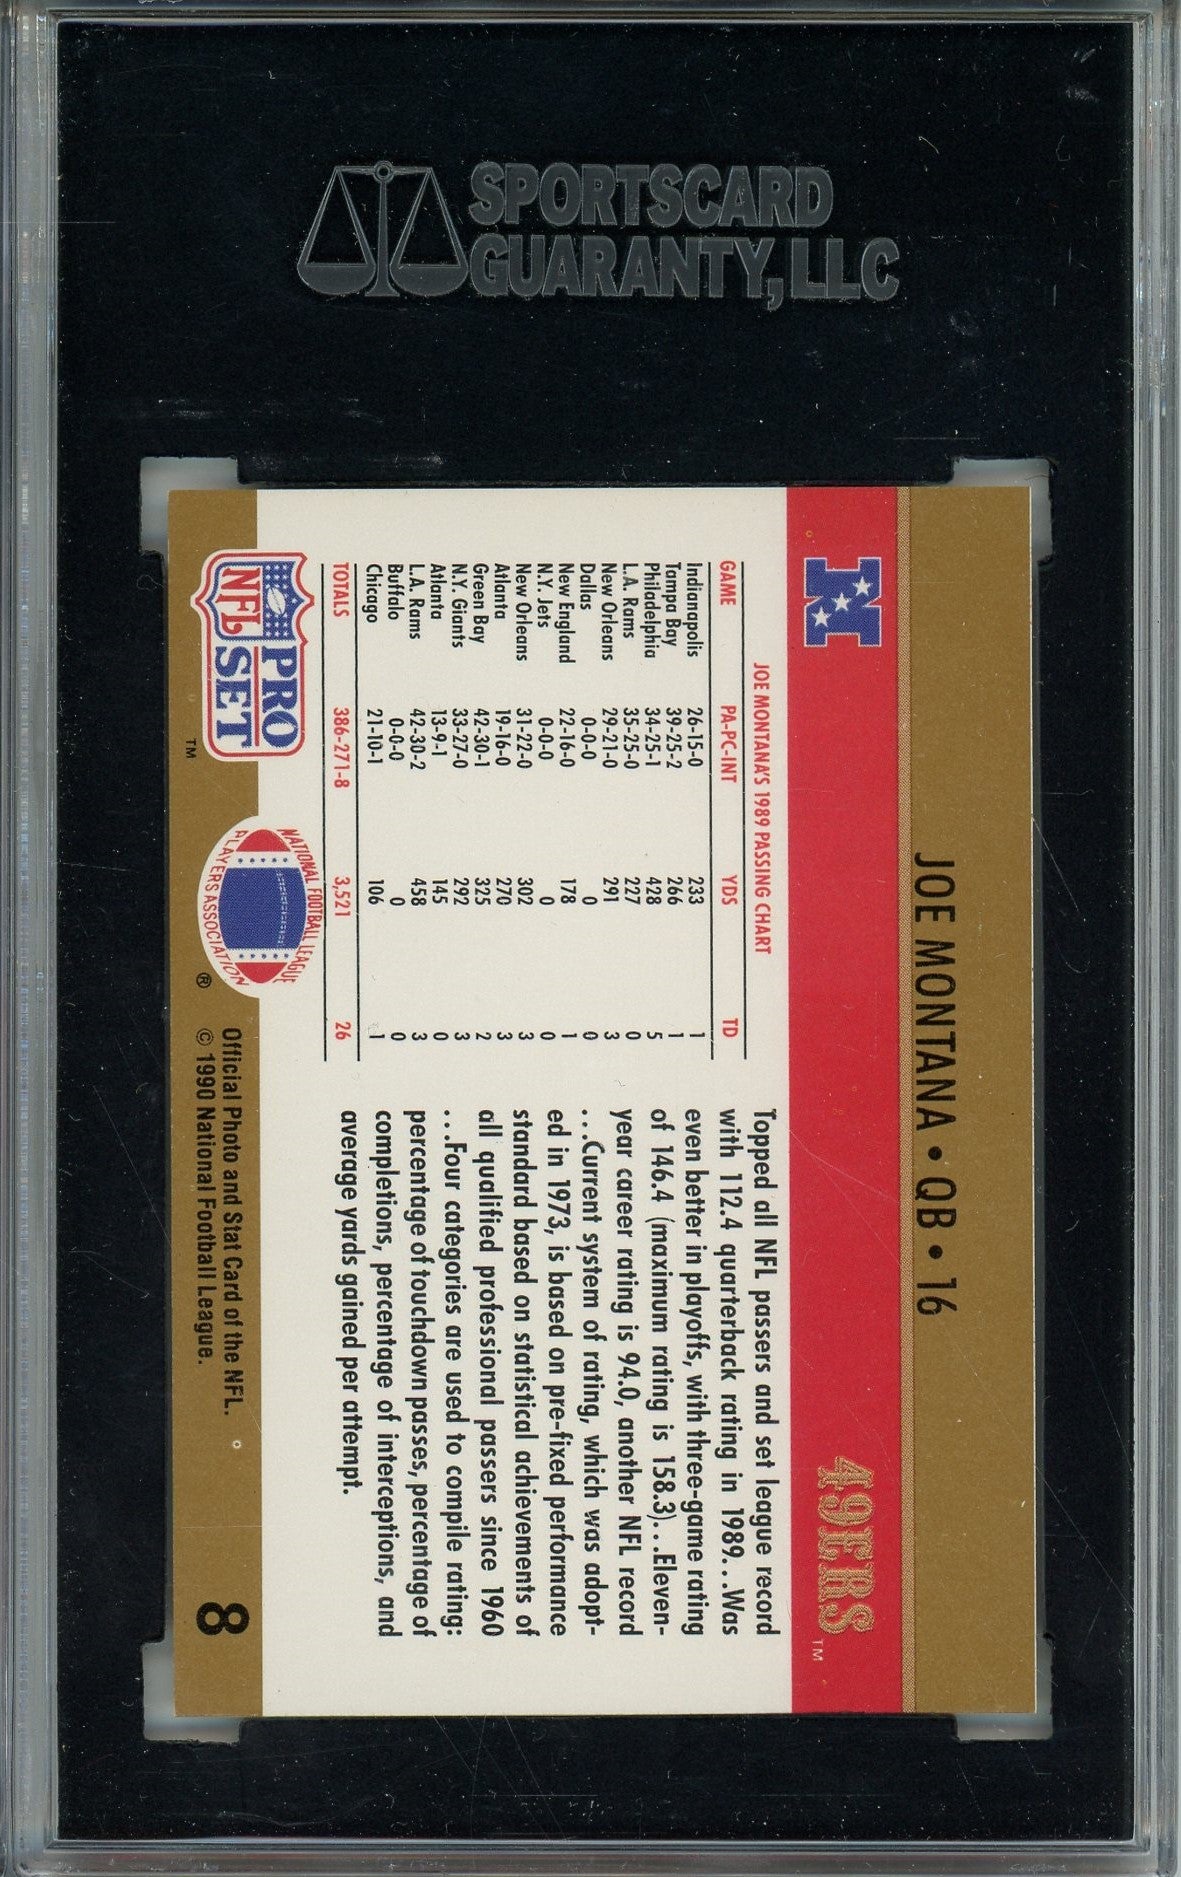 1990 PRO SET JOE MONTANA NFL PASSING LEADER SGC AUTO CARD AUTHENTIC